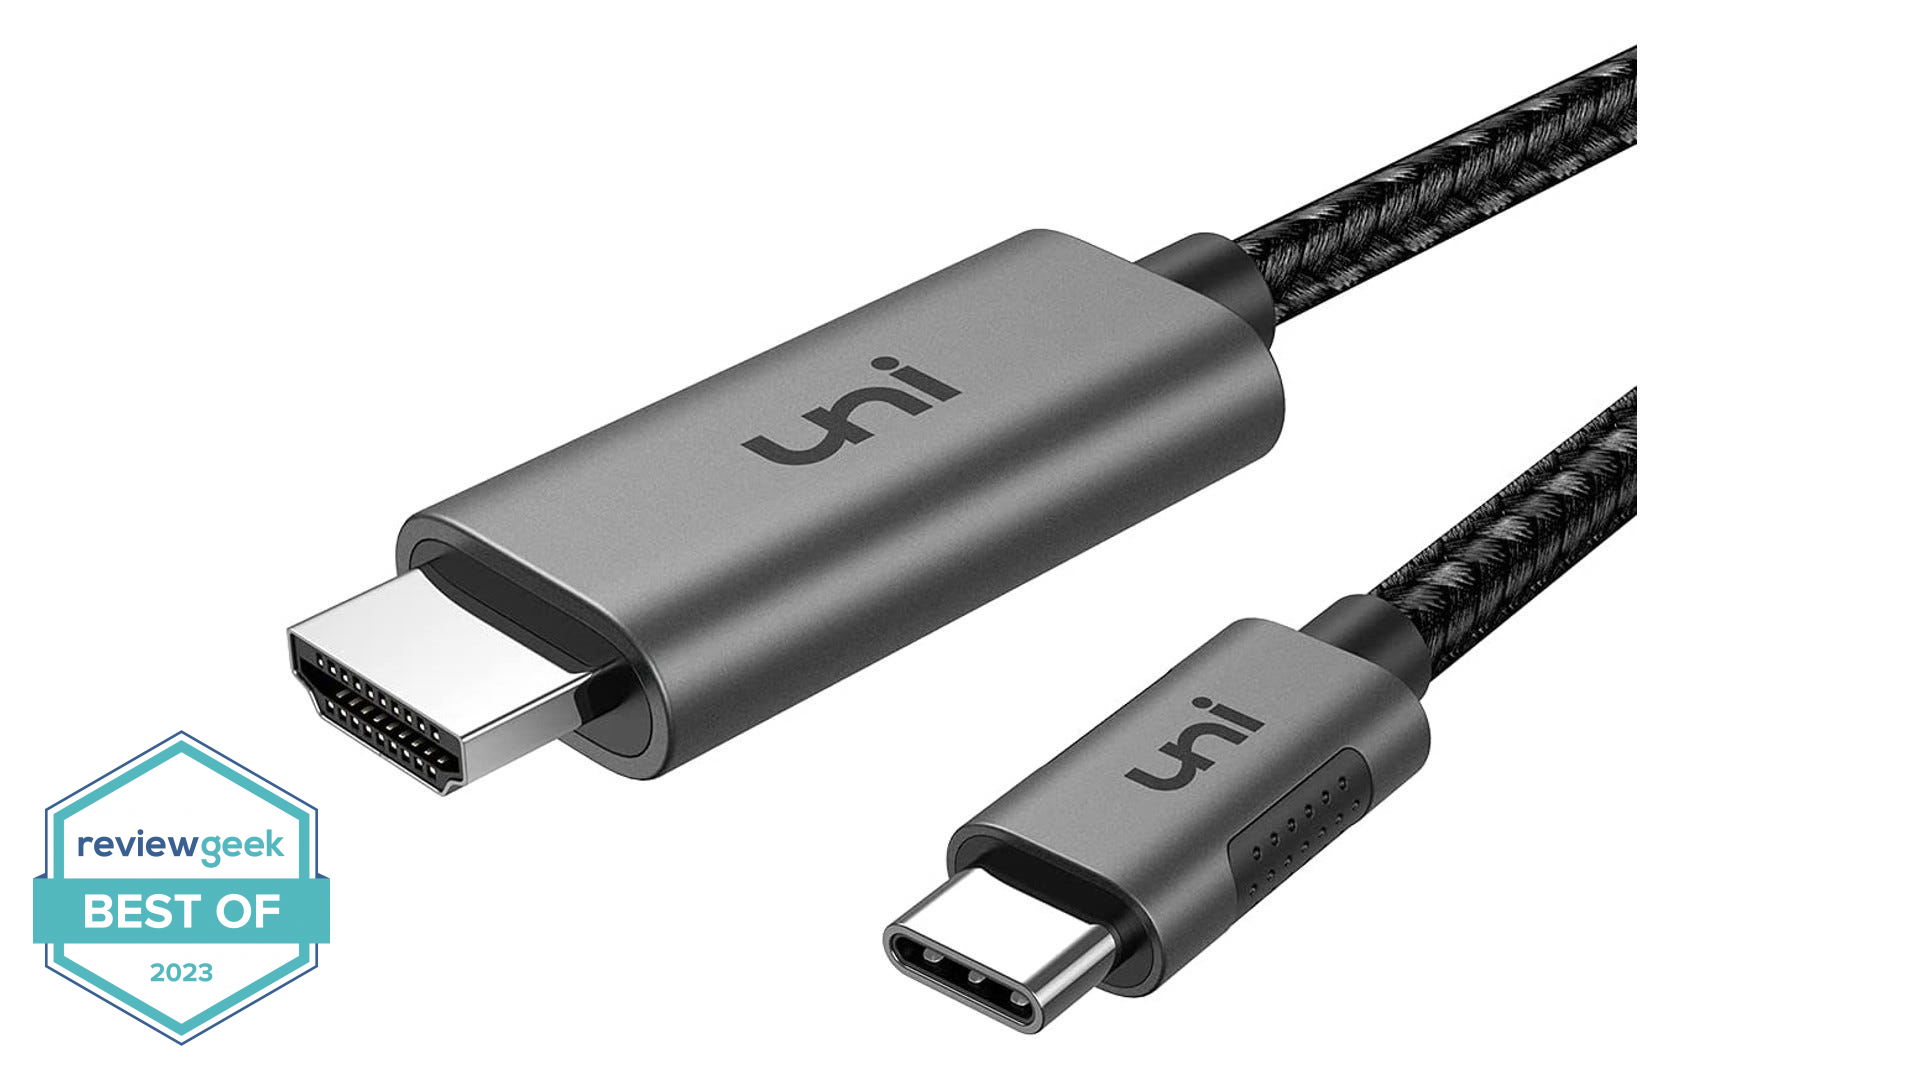 Uni USB-C to HDMI Converter on a white background